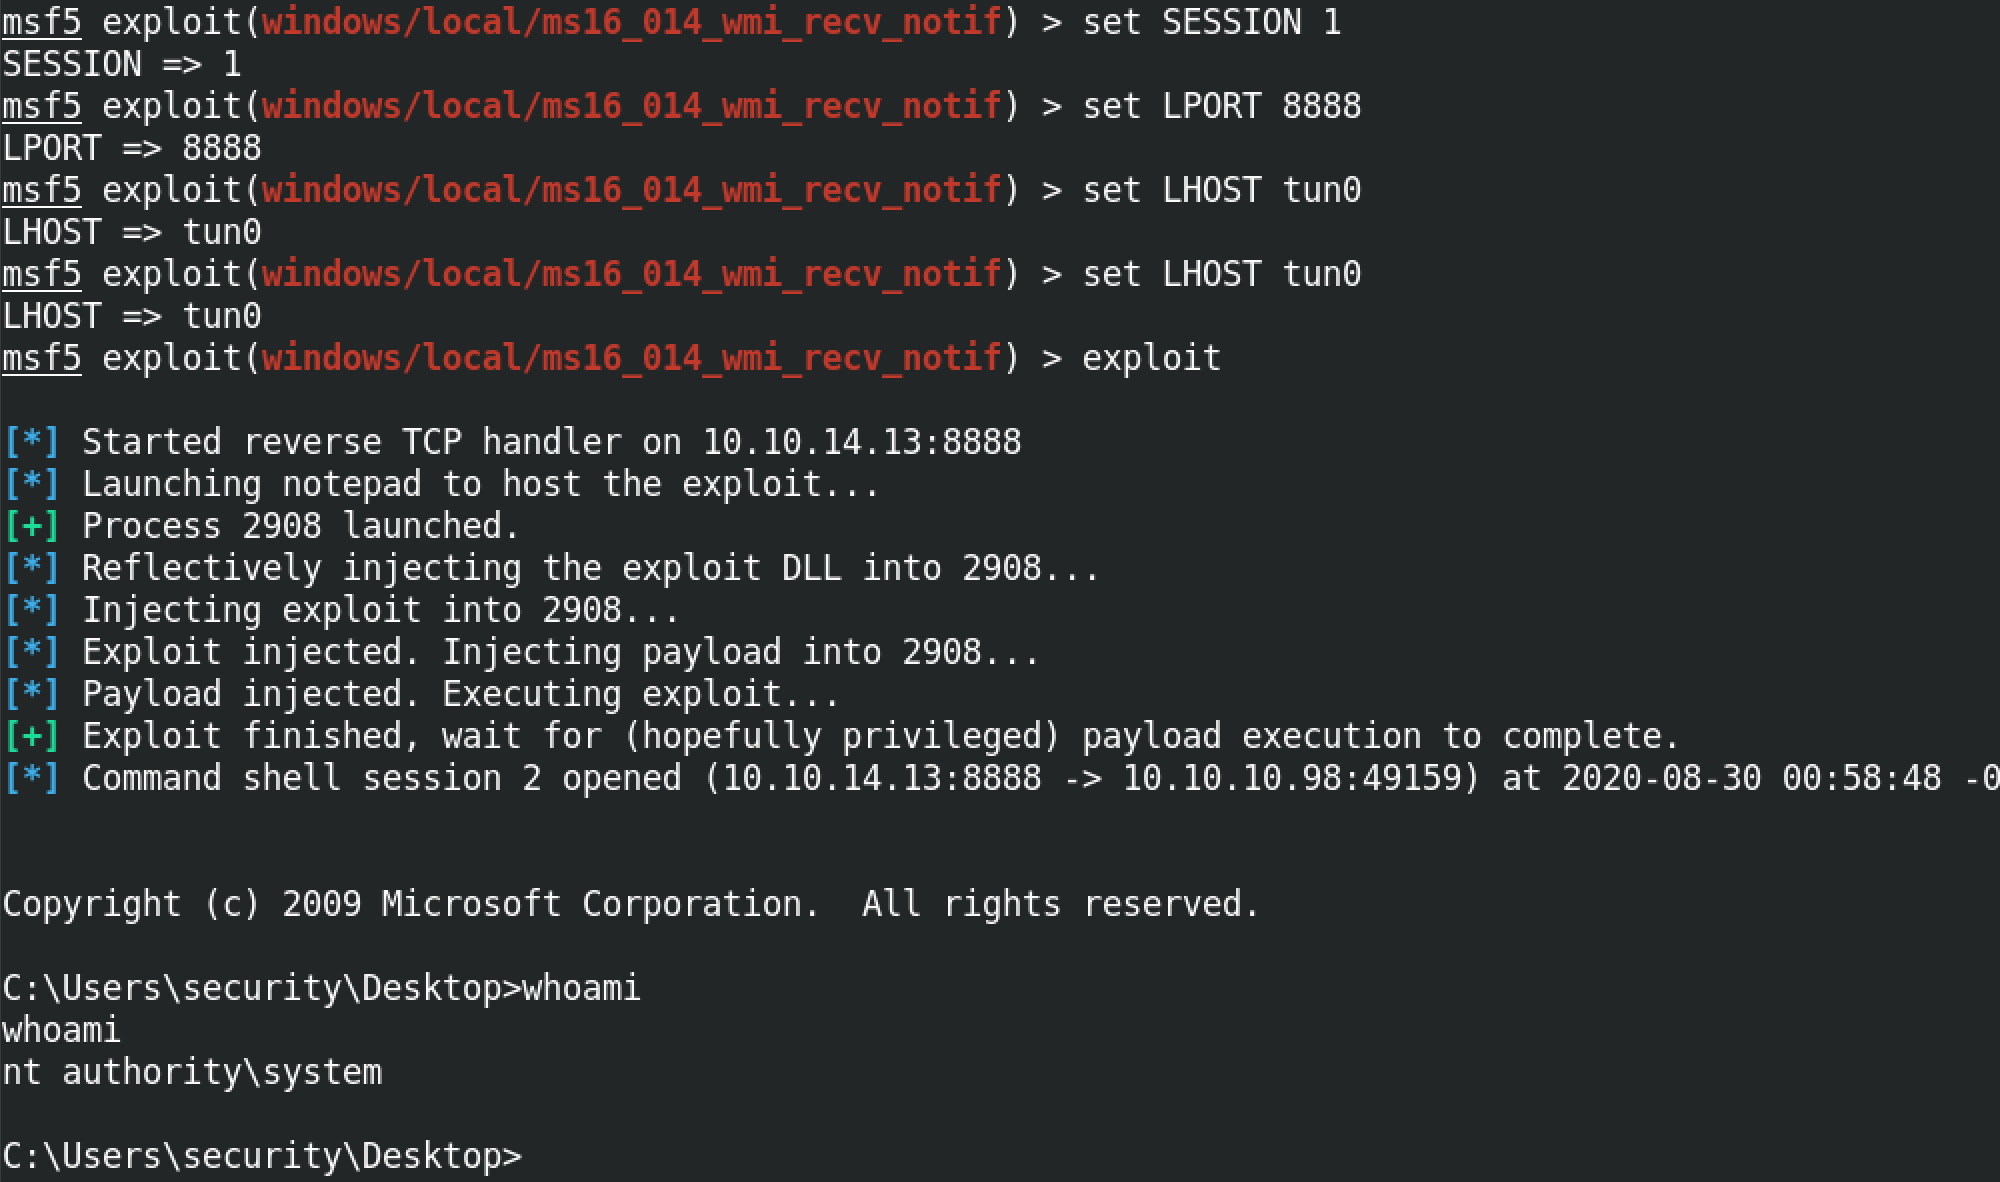 Execution of Metasploit's exploit/windows/local/ms16_014_wmi_recv_notif module.